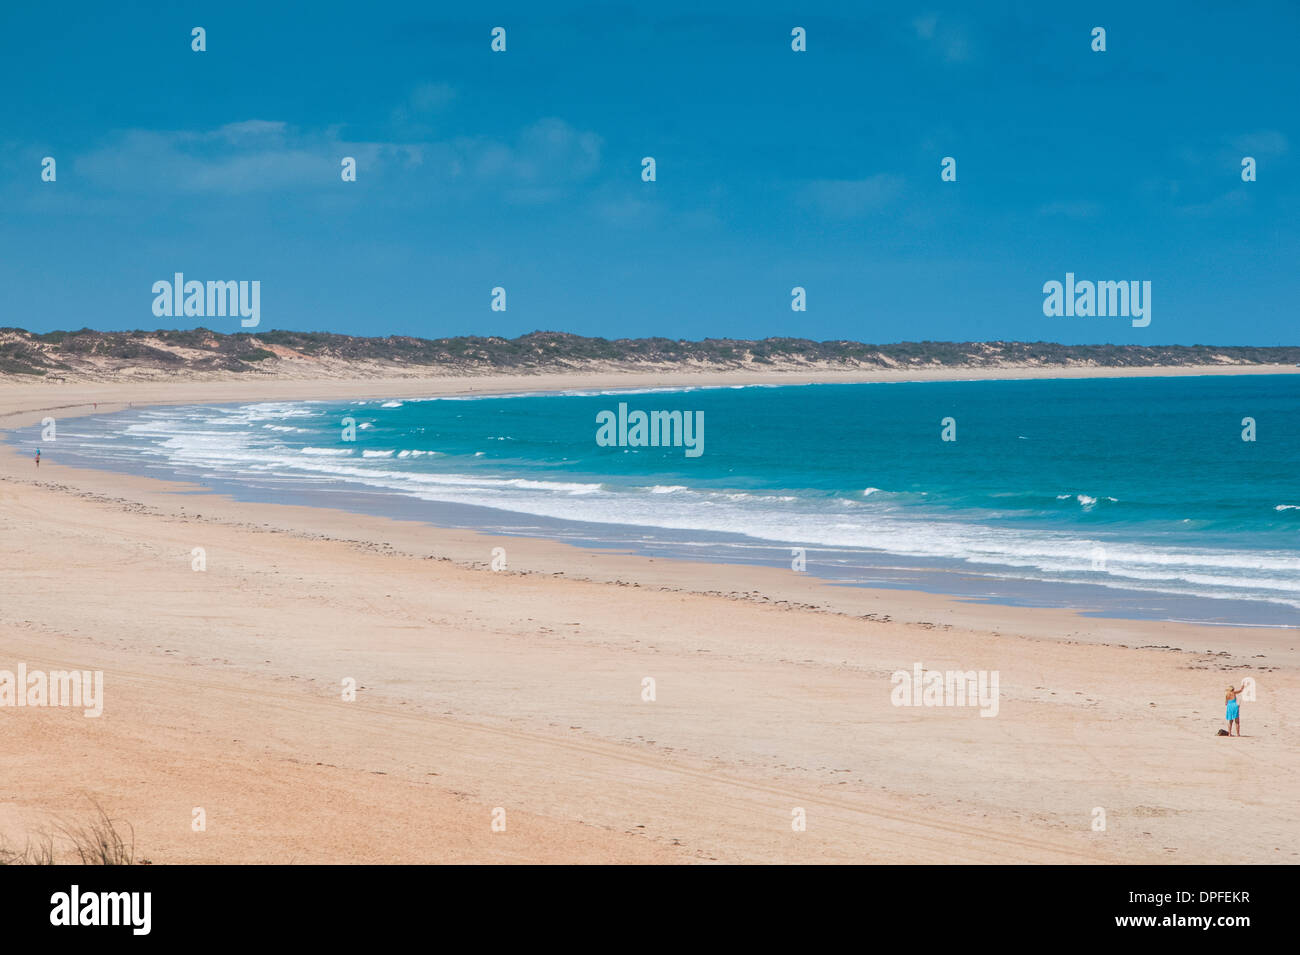 Broome australia fotografías e imágenes de alta resolución - Alamy